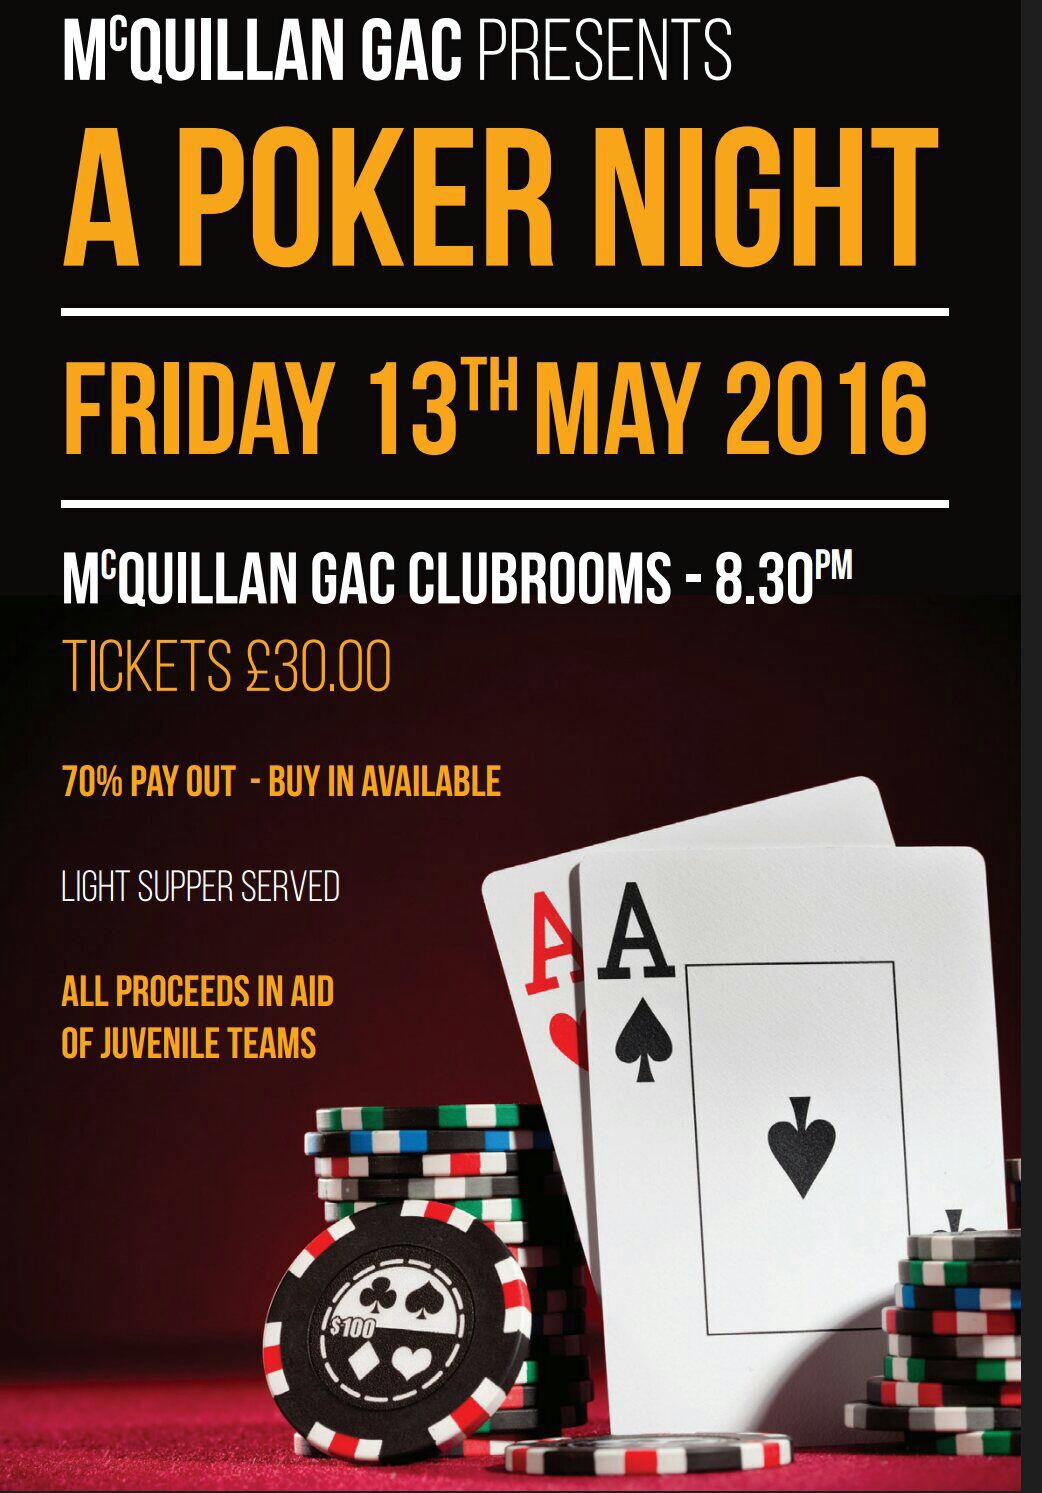 McQuillan GAC Poker Night in aid of Juvenile teams – Results